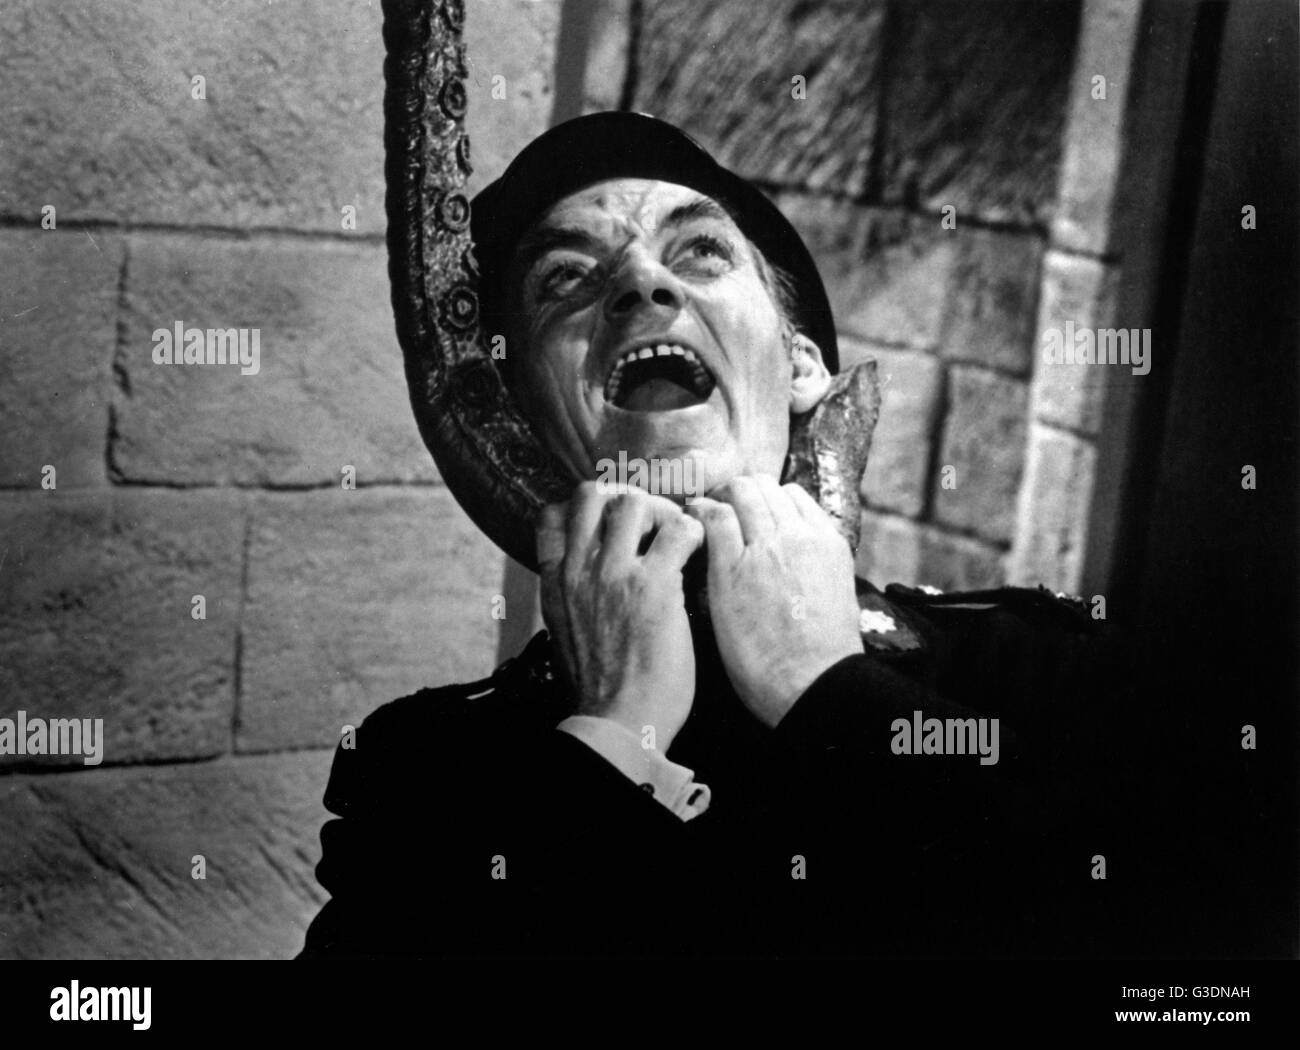 Île de la terreur, l'aka : Insel des Schreckens, alias : un Todesmonster greifen, Großbritannien 1966, Regie : Terence Fisher, Szenenfoto Banque D'Images